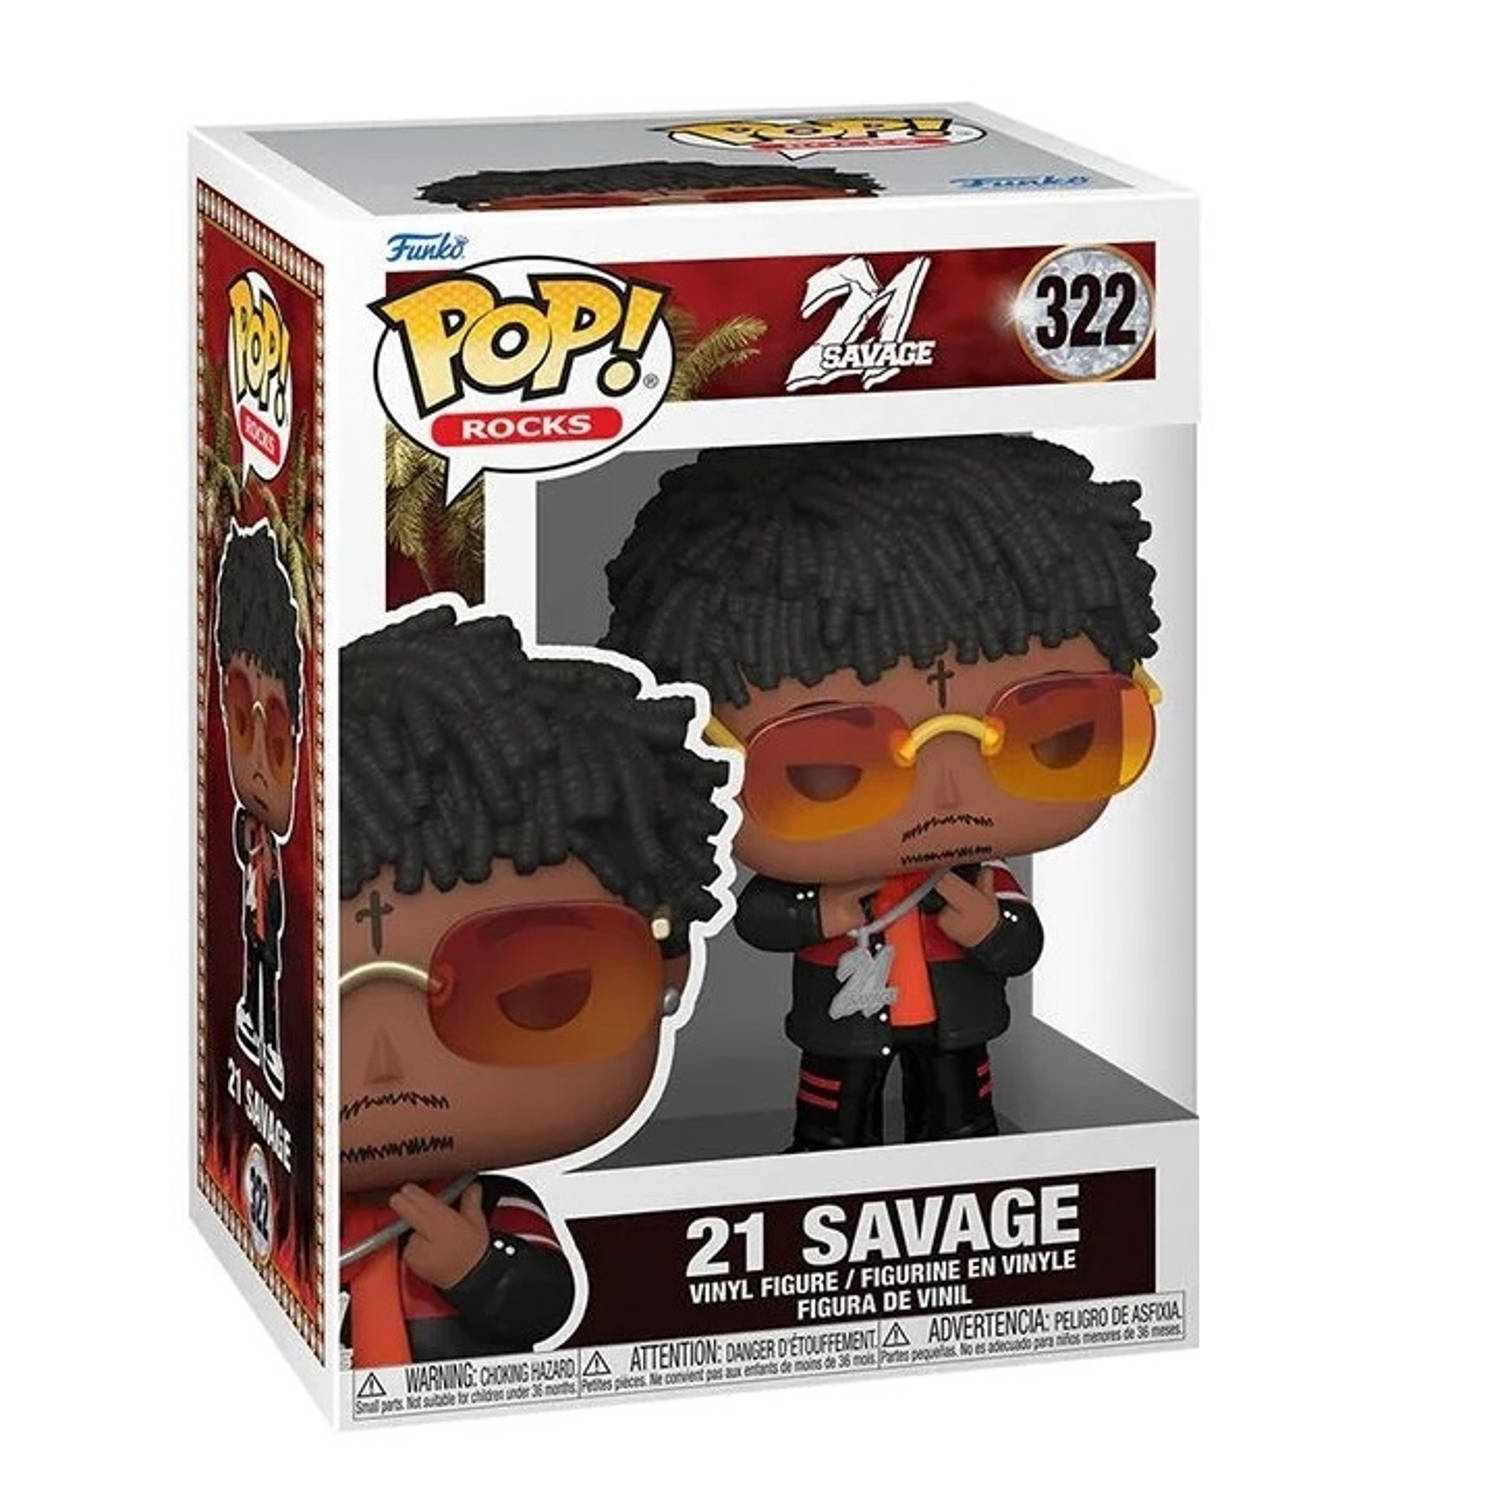 Funko Pop! Rocks 21 Savage - 21 Savage #322